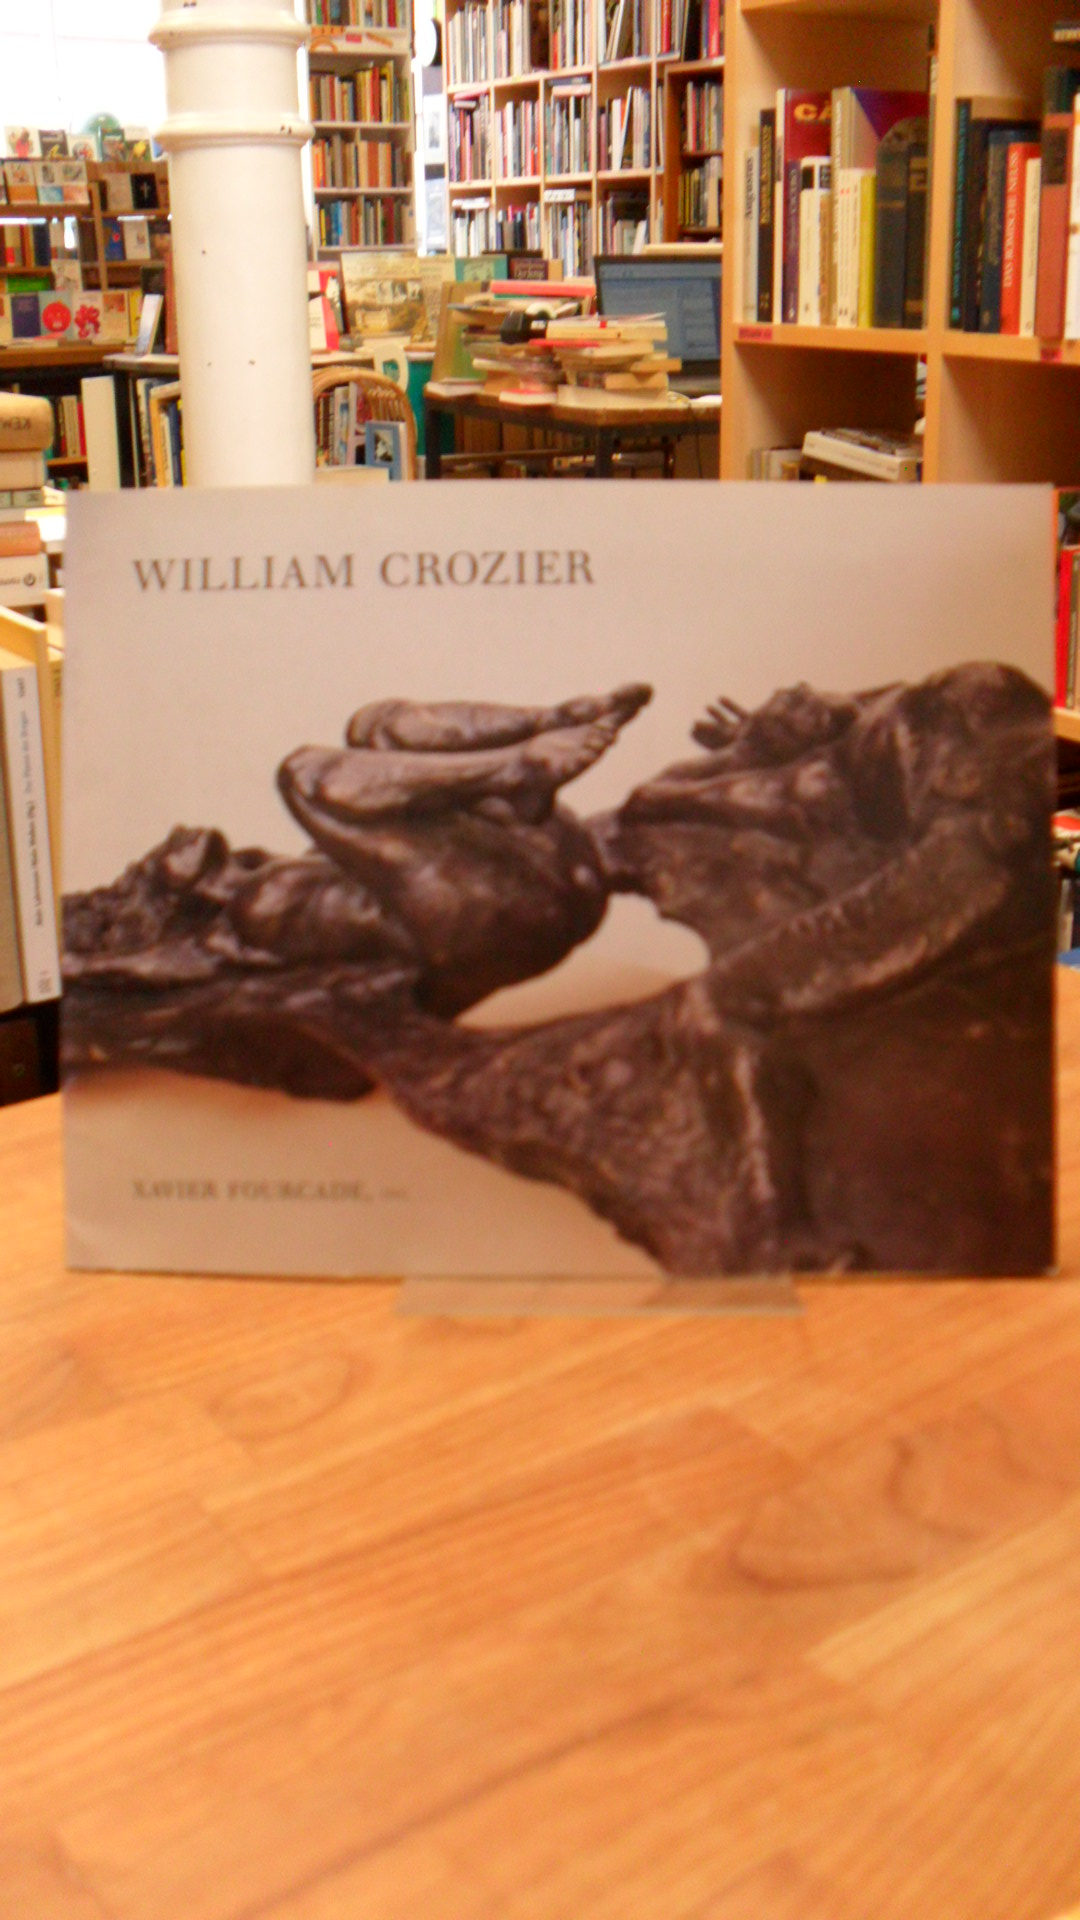 Crozier, William Crozier – Sculpture 1968-1985,